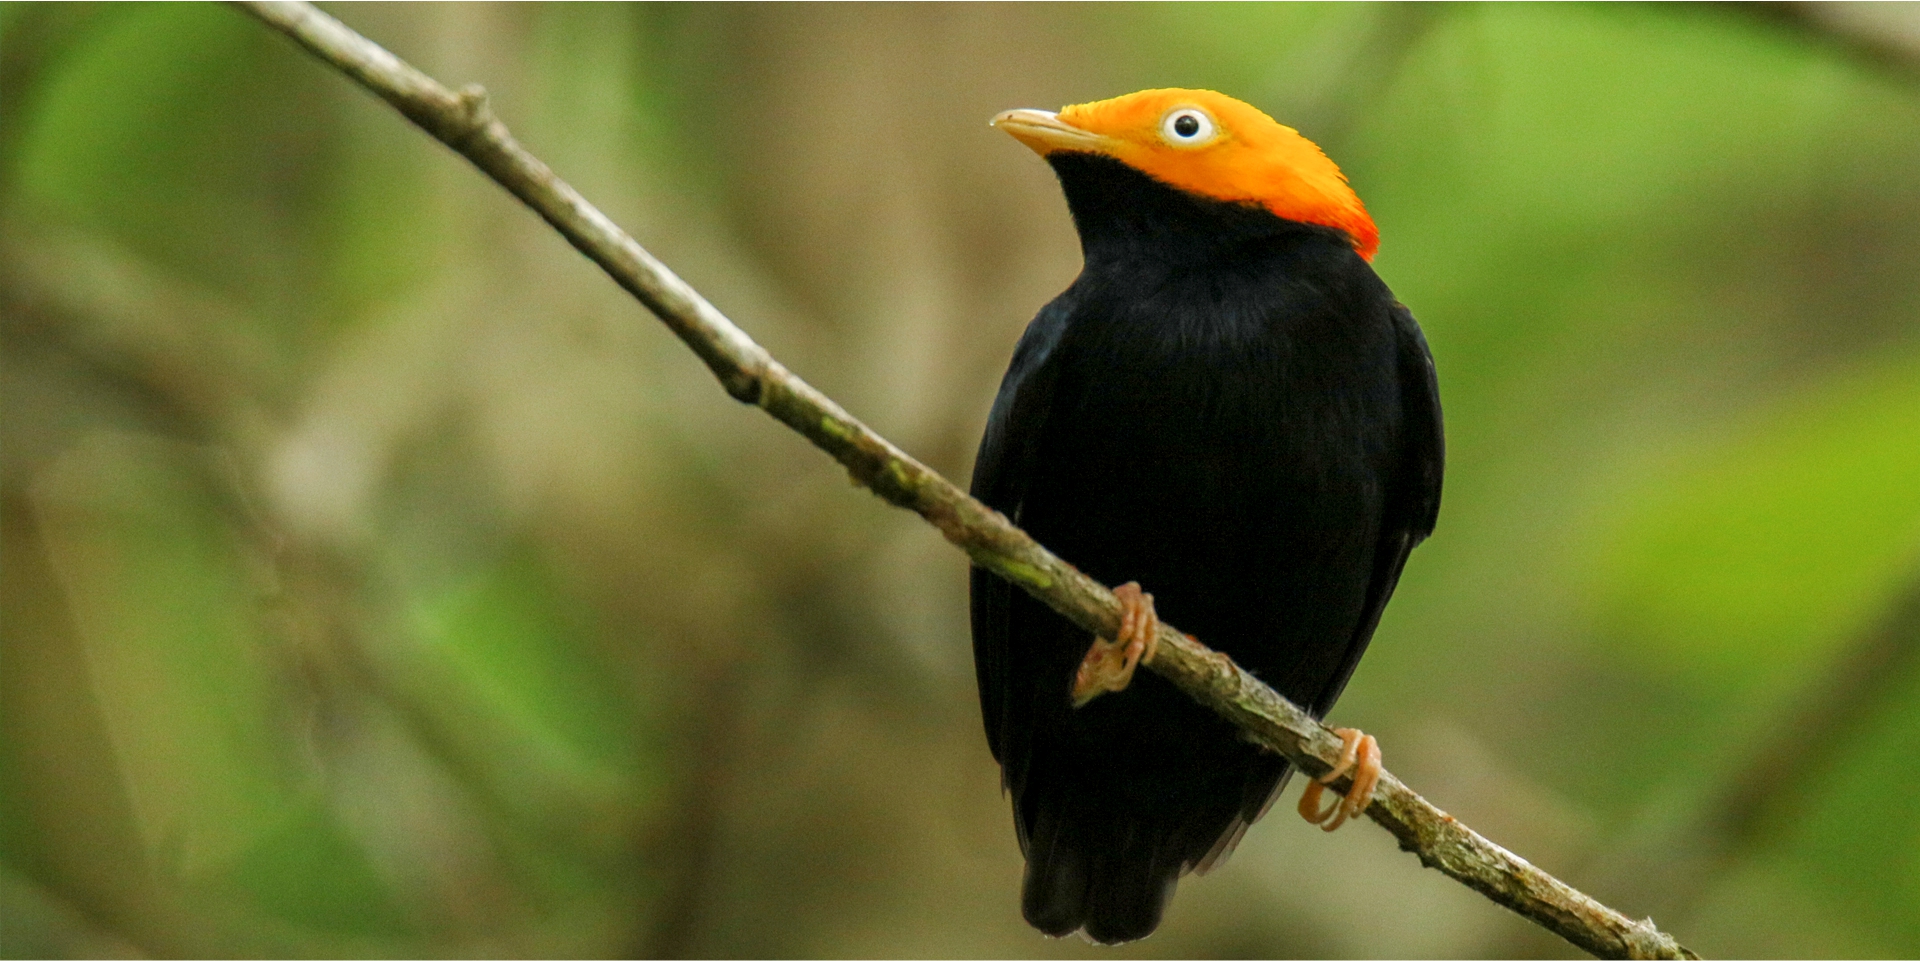 Golden-headed Manakin - Ceratopipra erythrocephala - Birding in Colombia